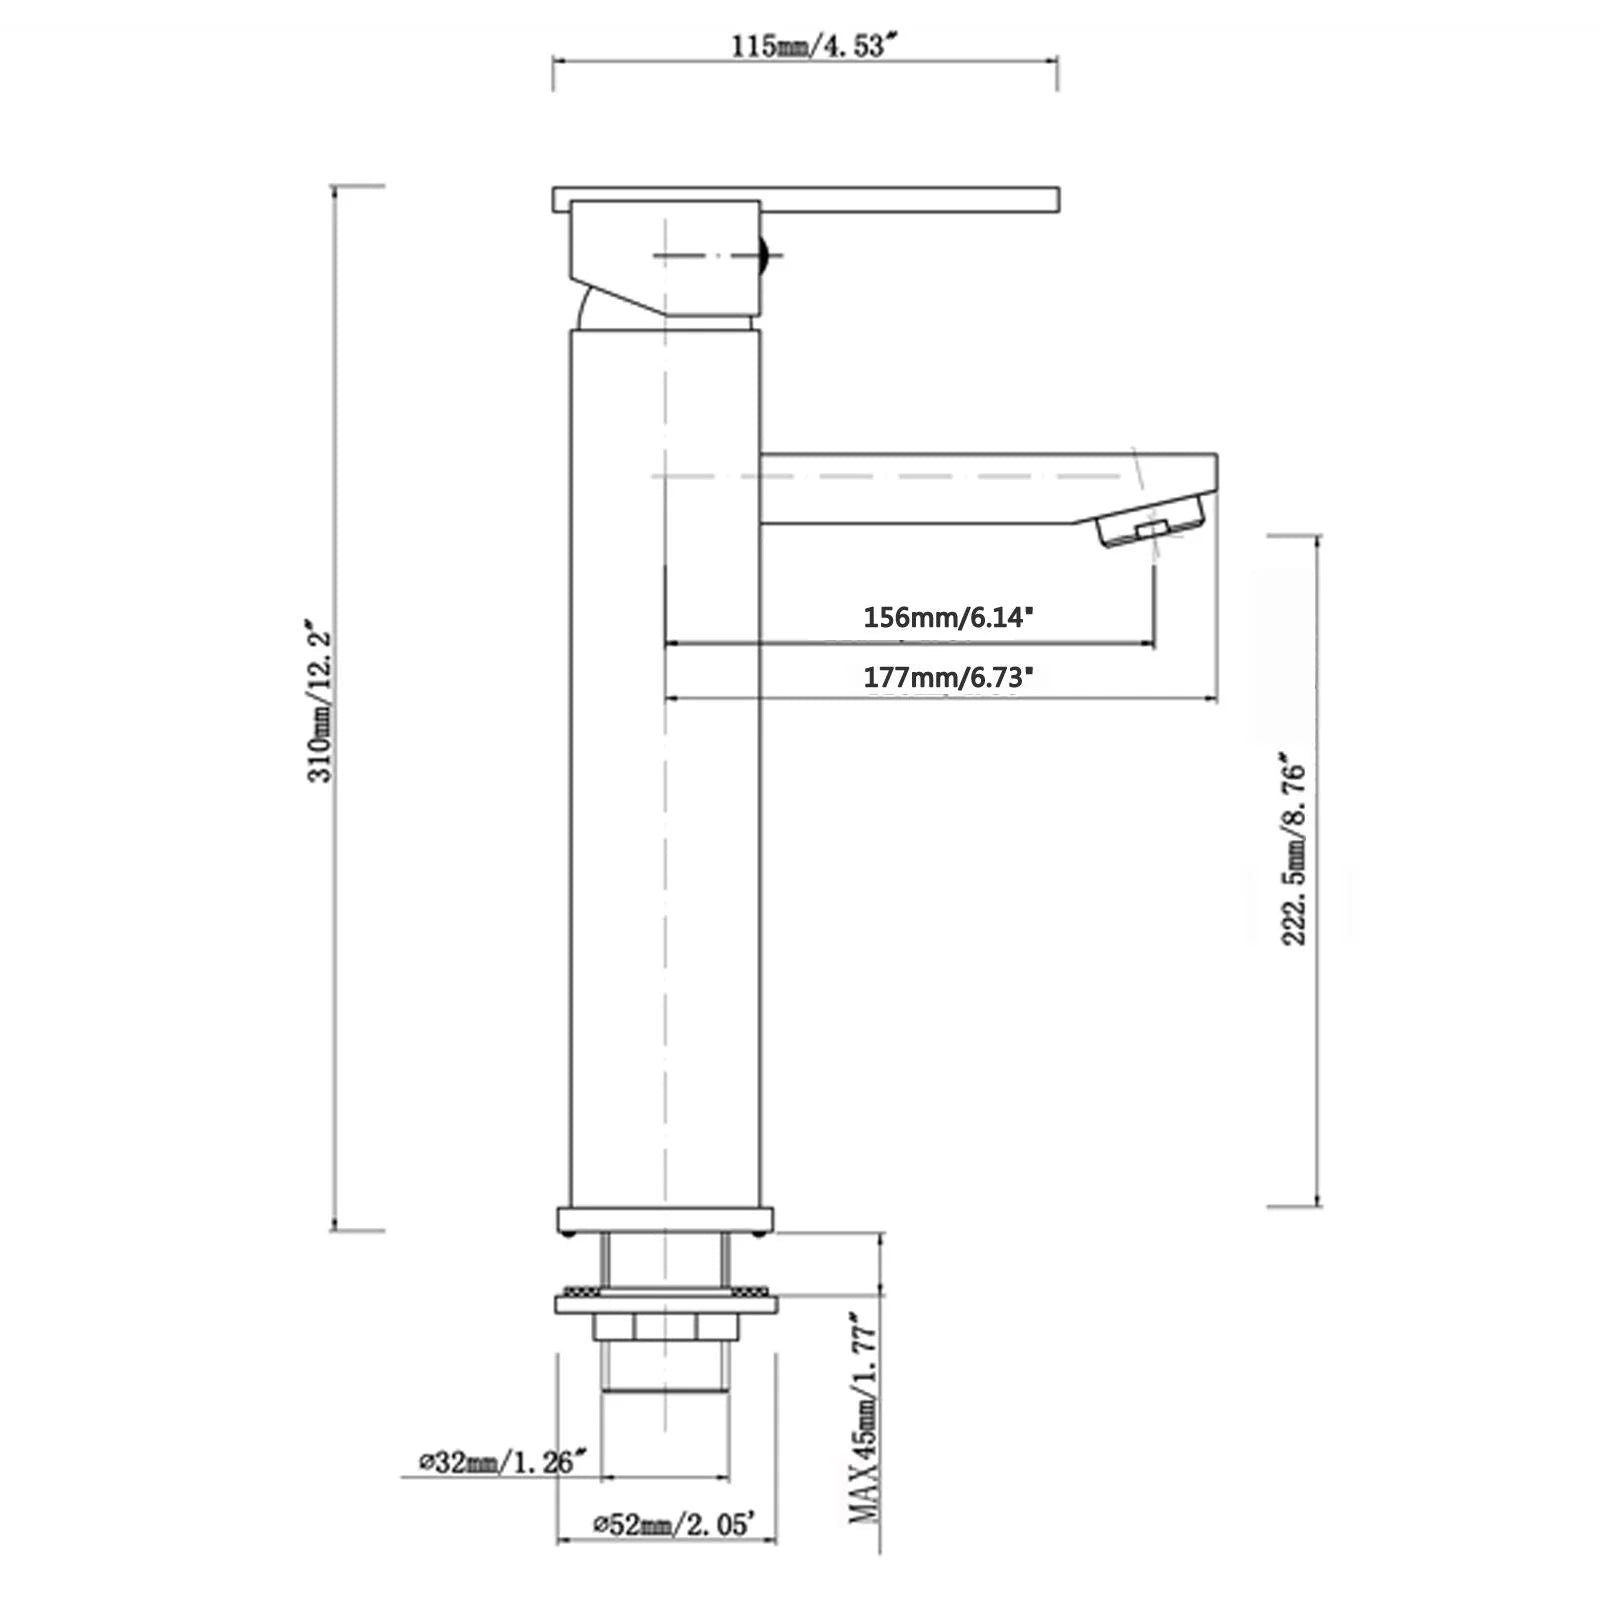 Blaze Tall Basin Mixer: Modern Faucet with Sleek Design and Functionality-Chrome-CH0119_BM, 3